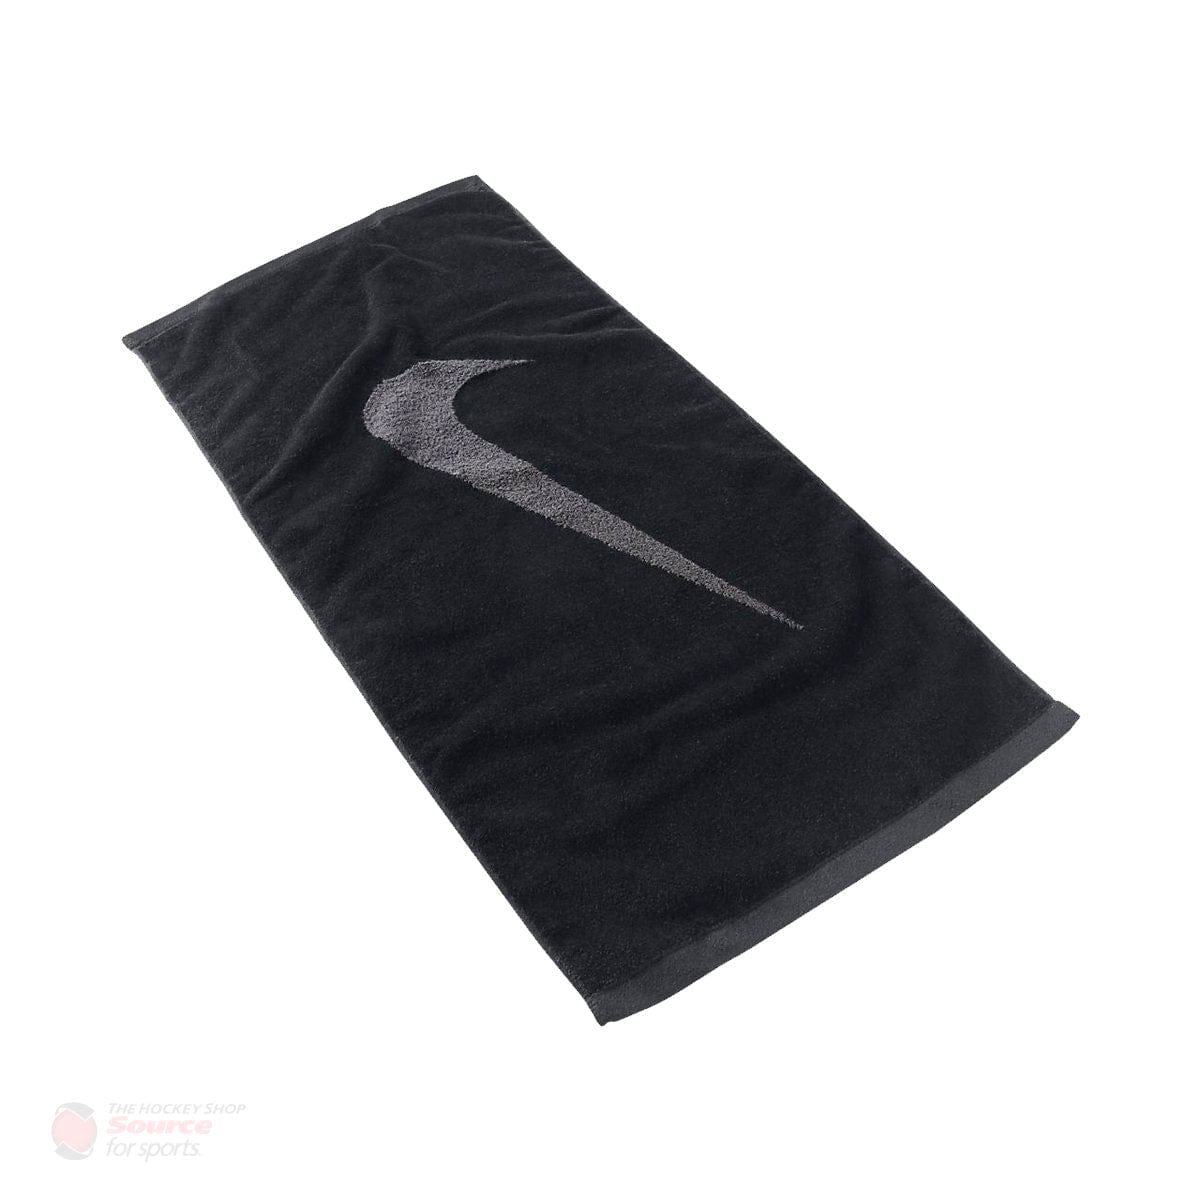 Nike Sport Towel